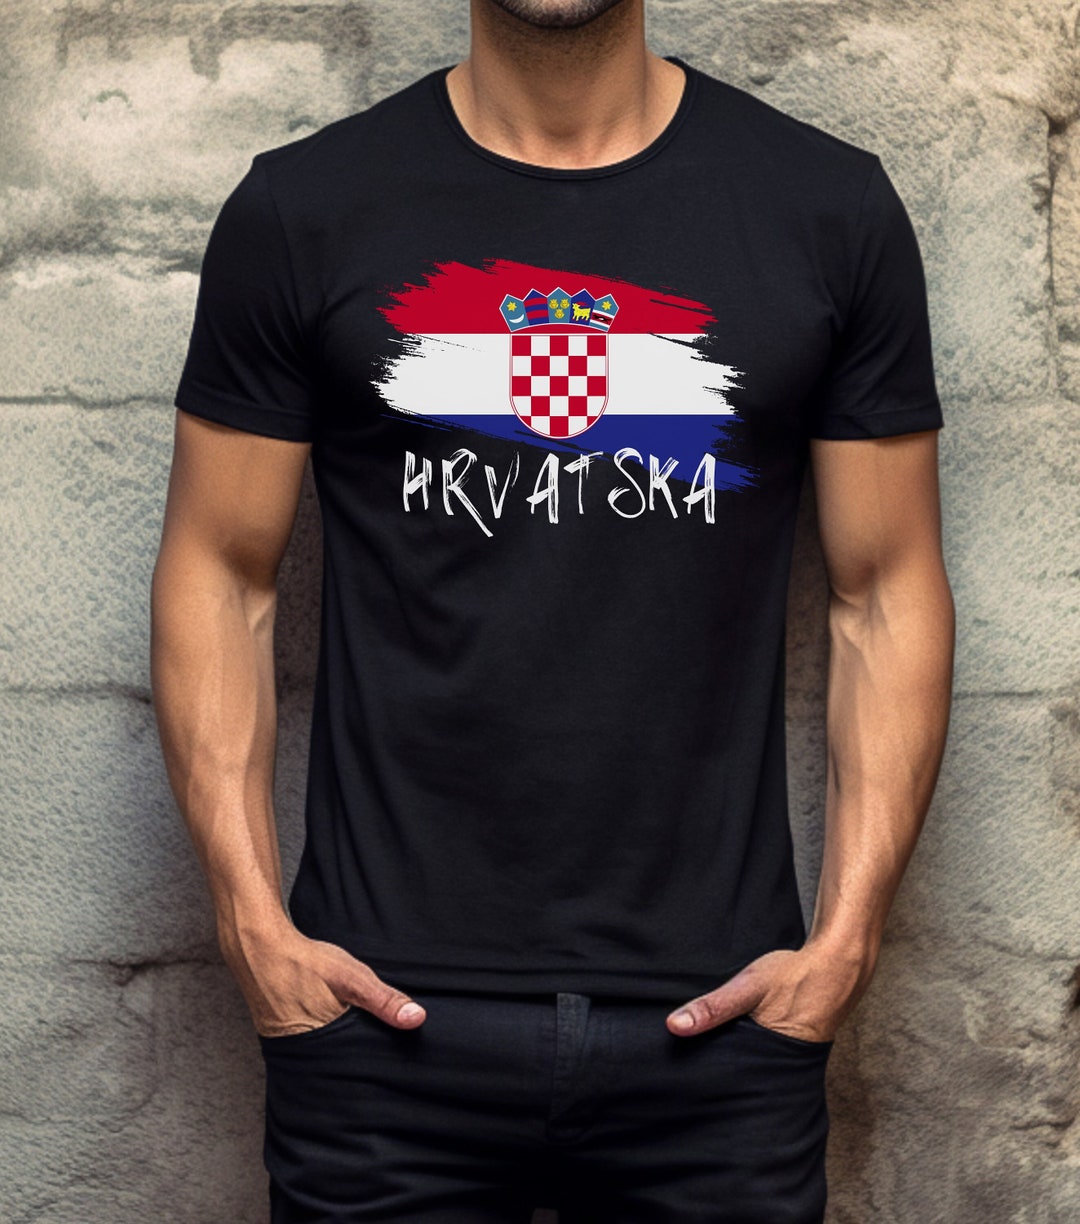 Hajduk's Third Jersey Chosen as Top Five Most Beautiful! - Total Croatia